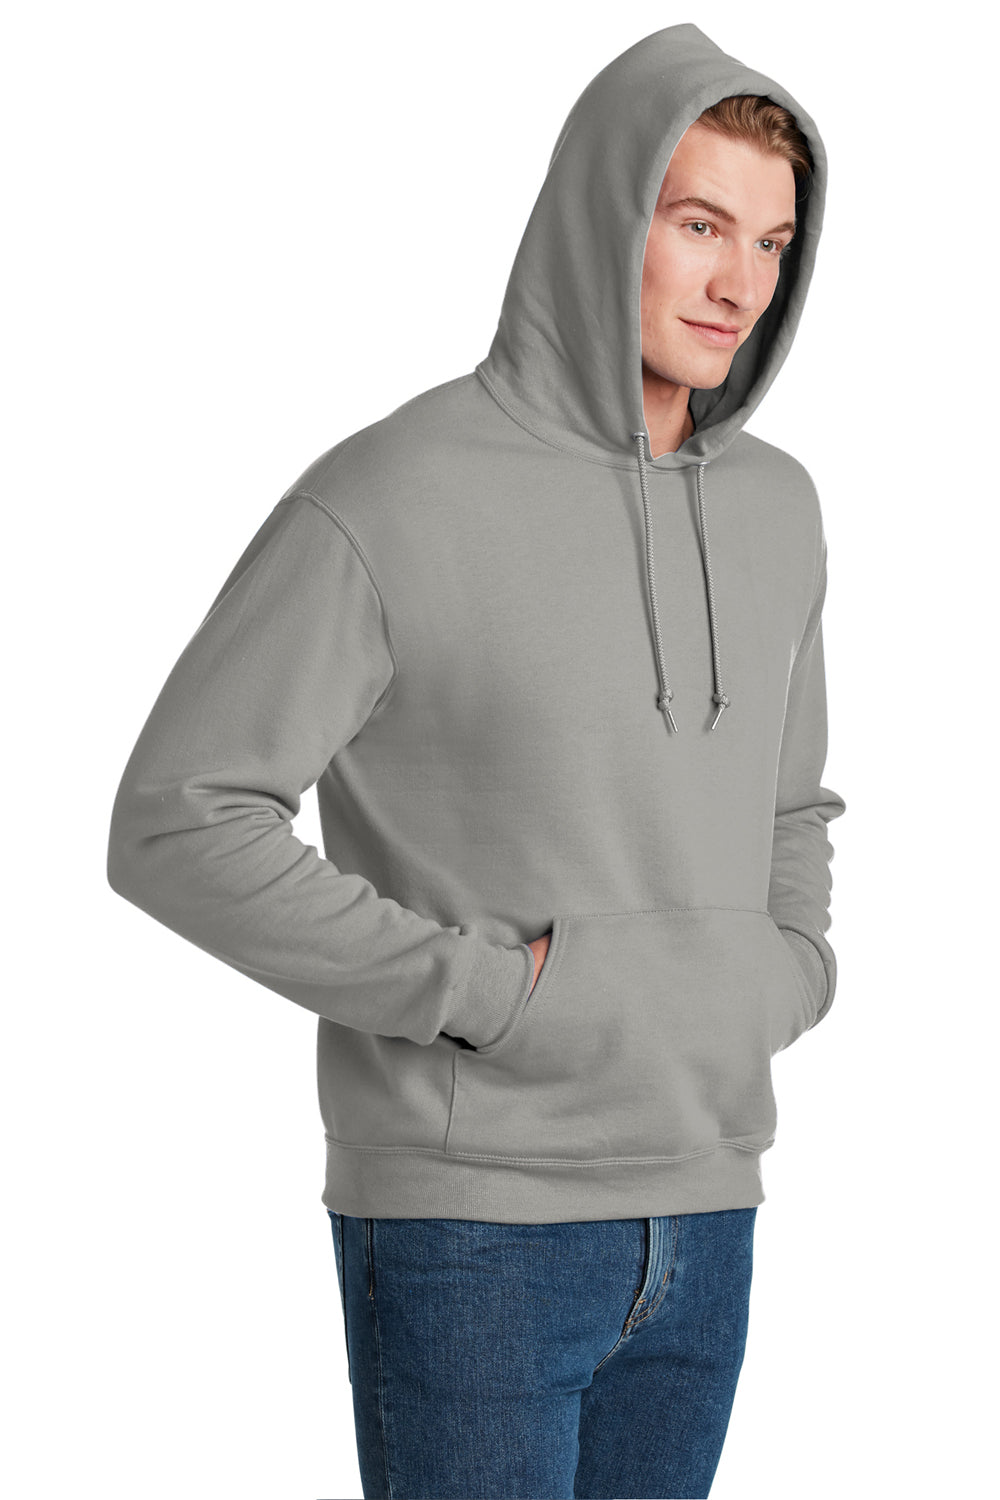 Jerzees Mens NuBlend Fleece Hooded Sweatshirt Hoodie Rock Grey 3Q